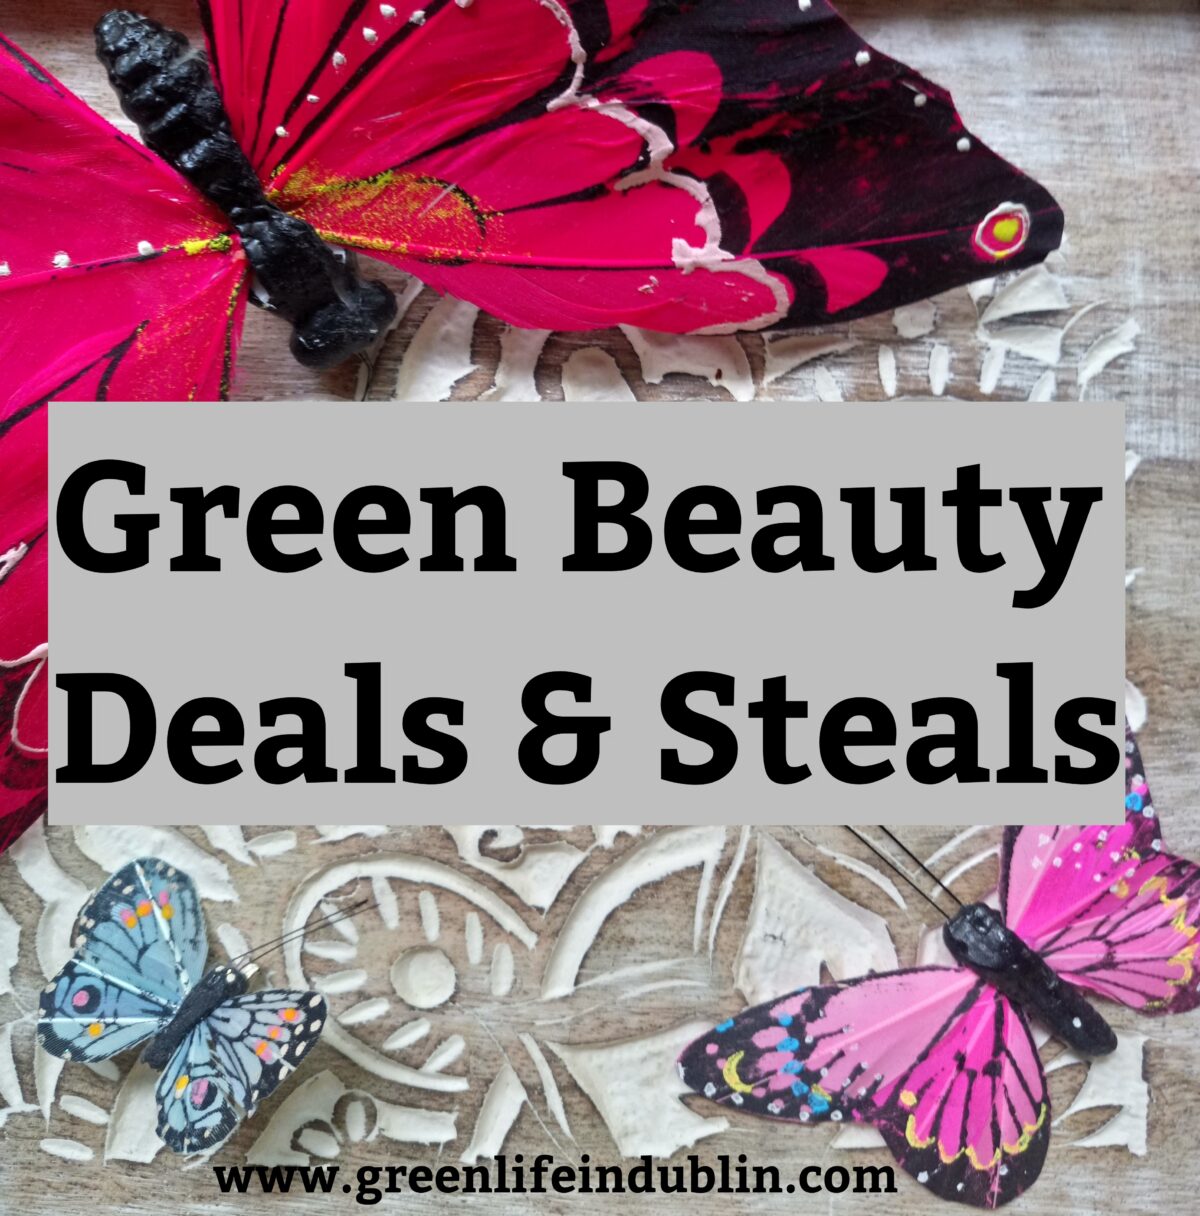 Green Beauty Deals, steals & discounts